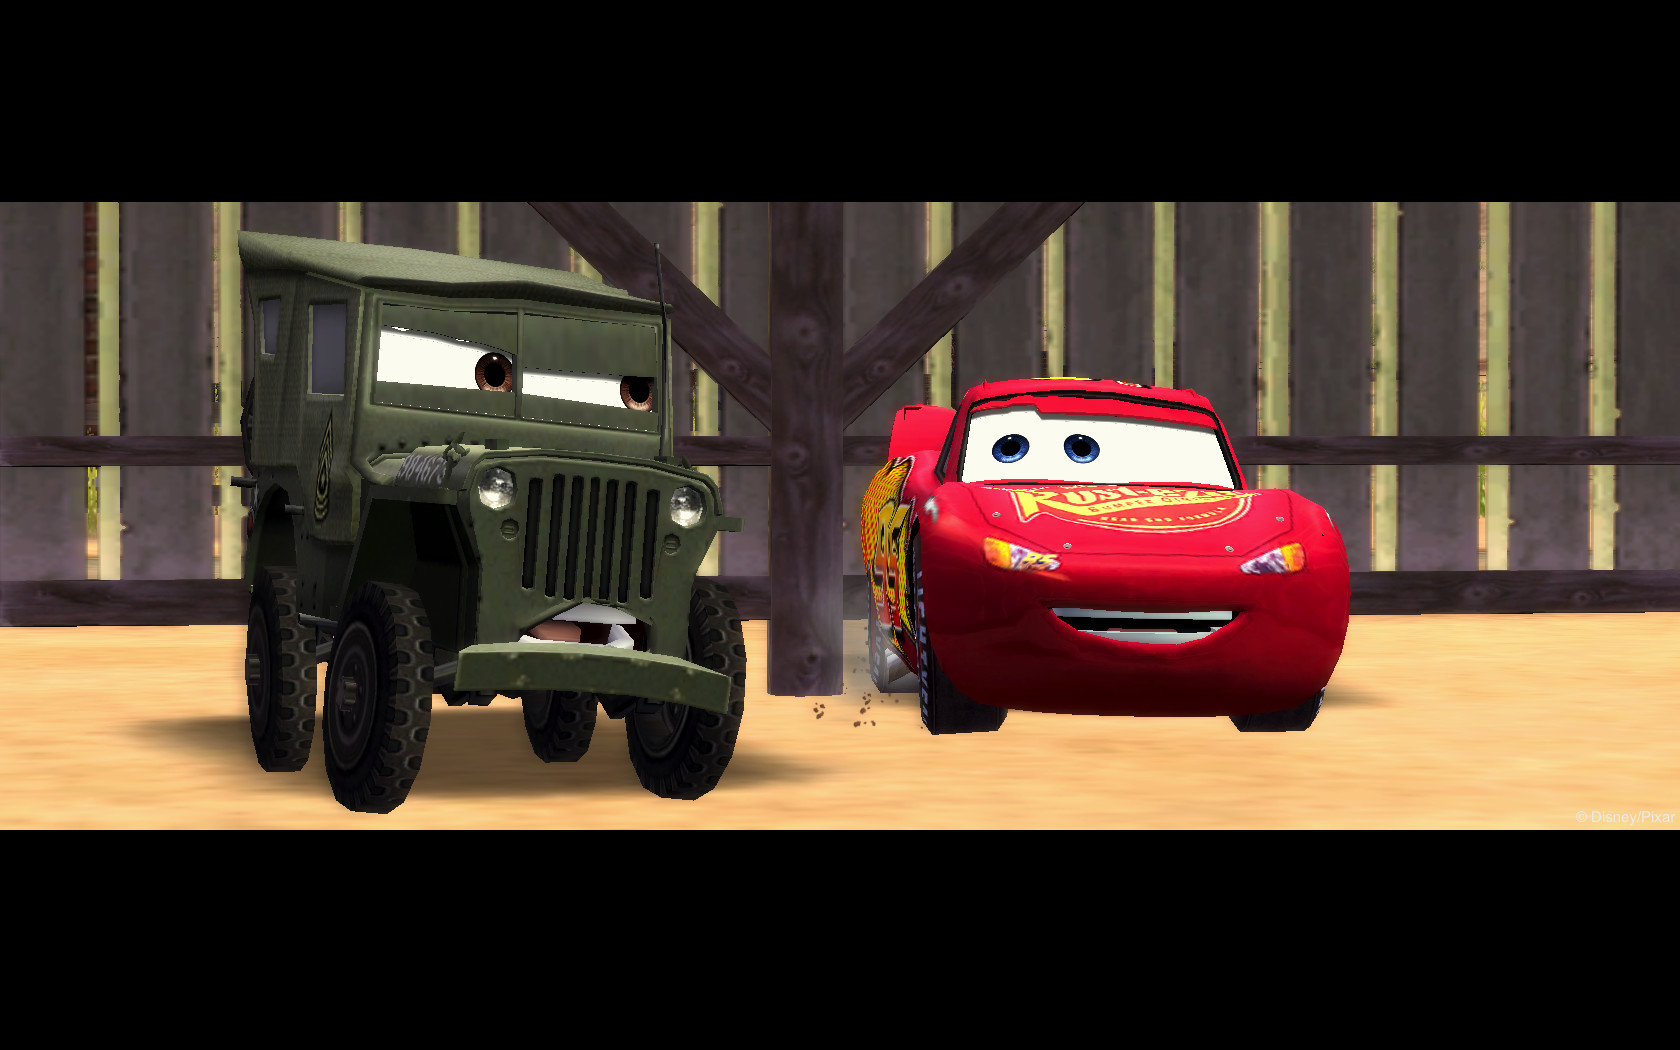 disney pixar cars video game download free